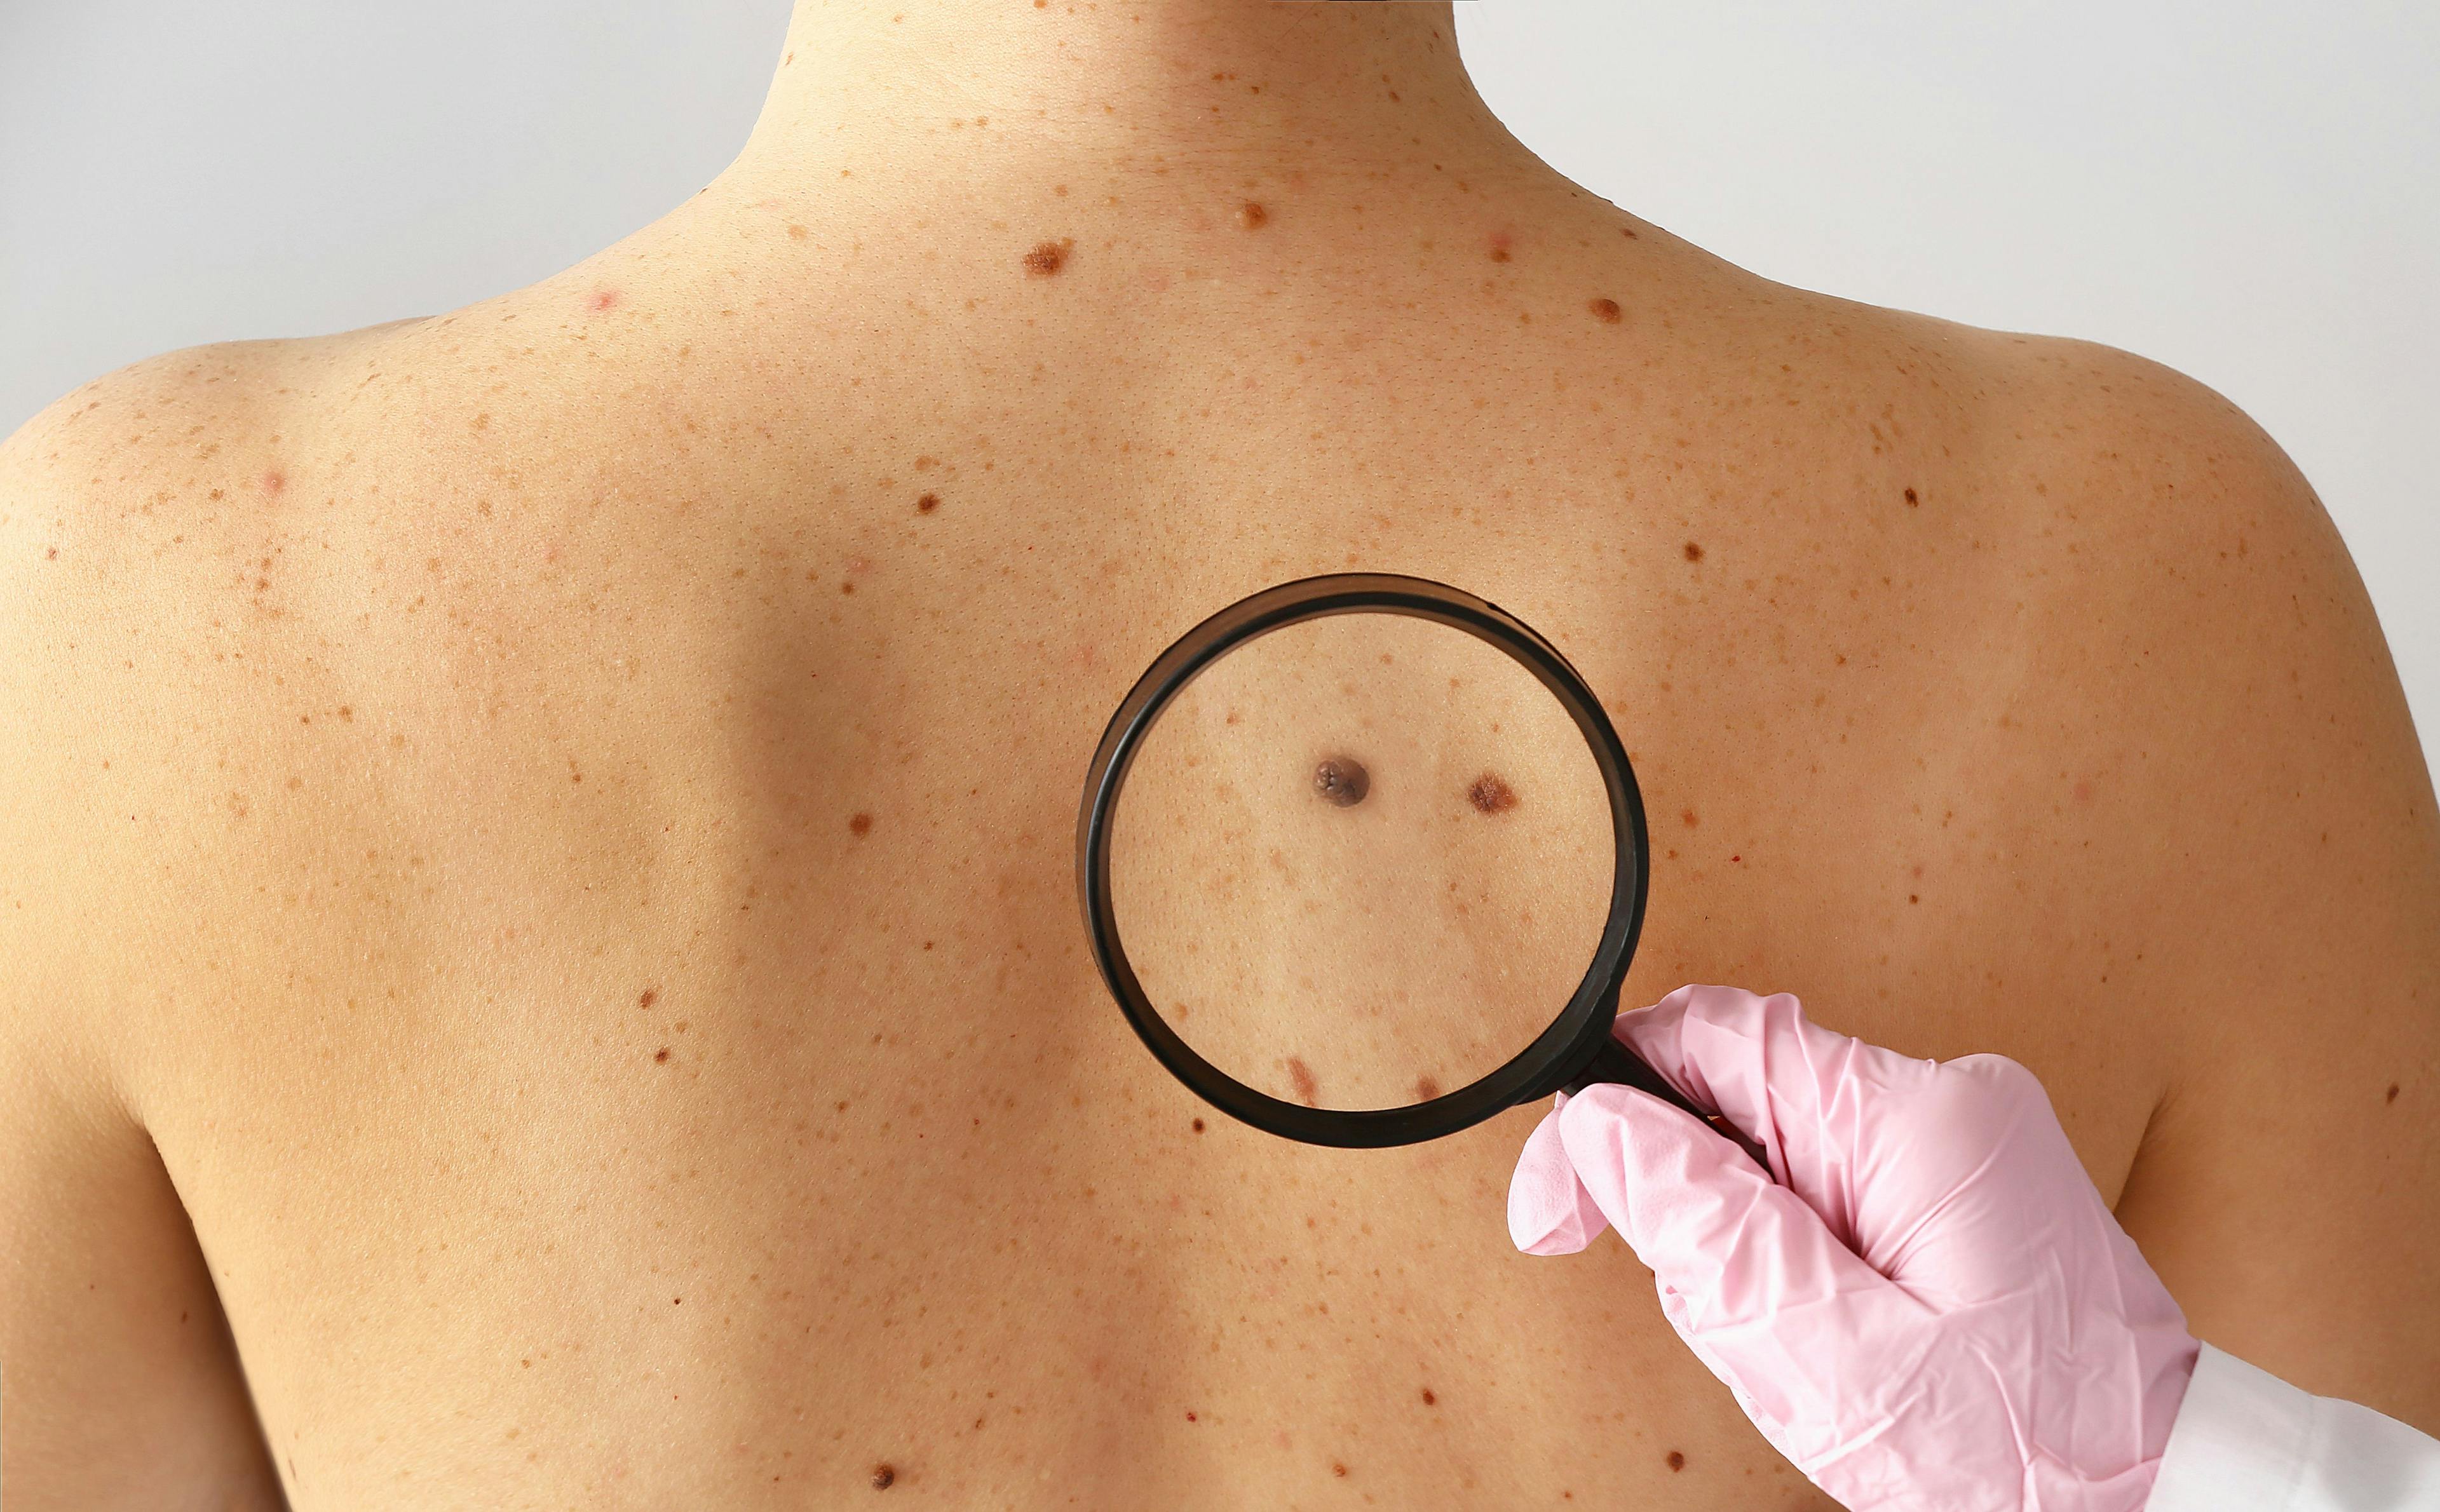 melanoma skin cancer | Image Credit: Pixel-Shot - stock.adobe.com